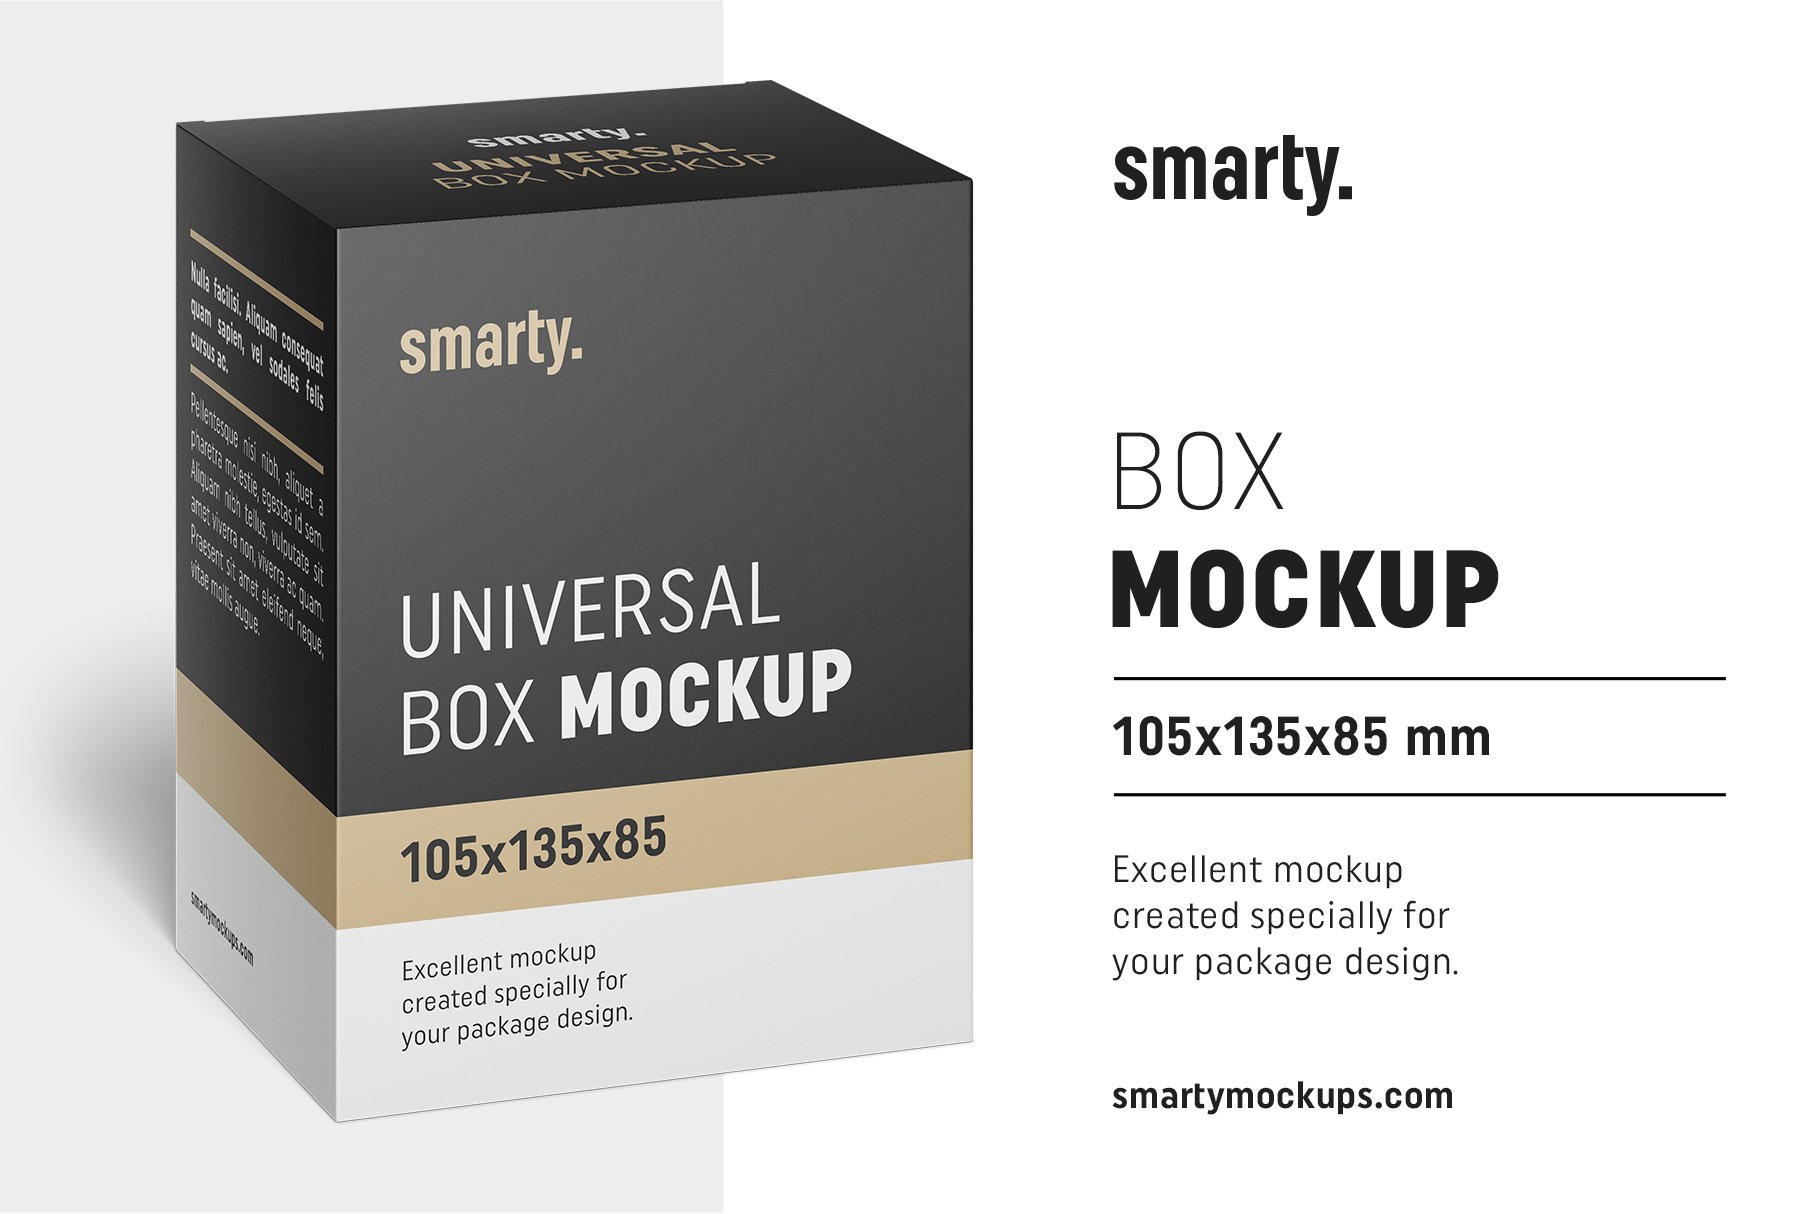 Box mockup / 105x135x85 mm cover image.